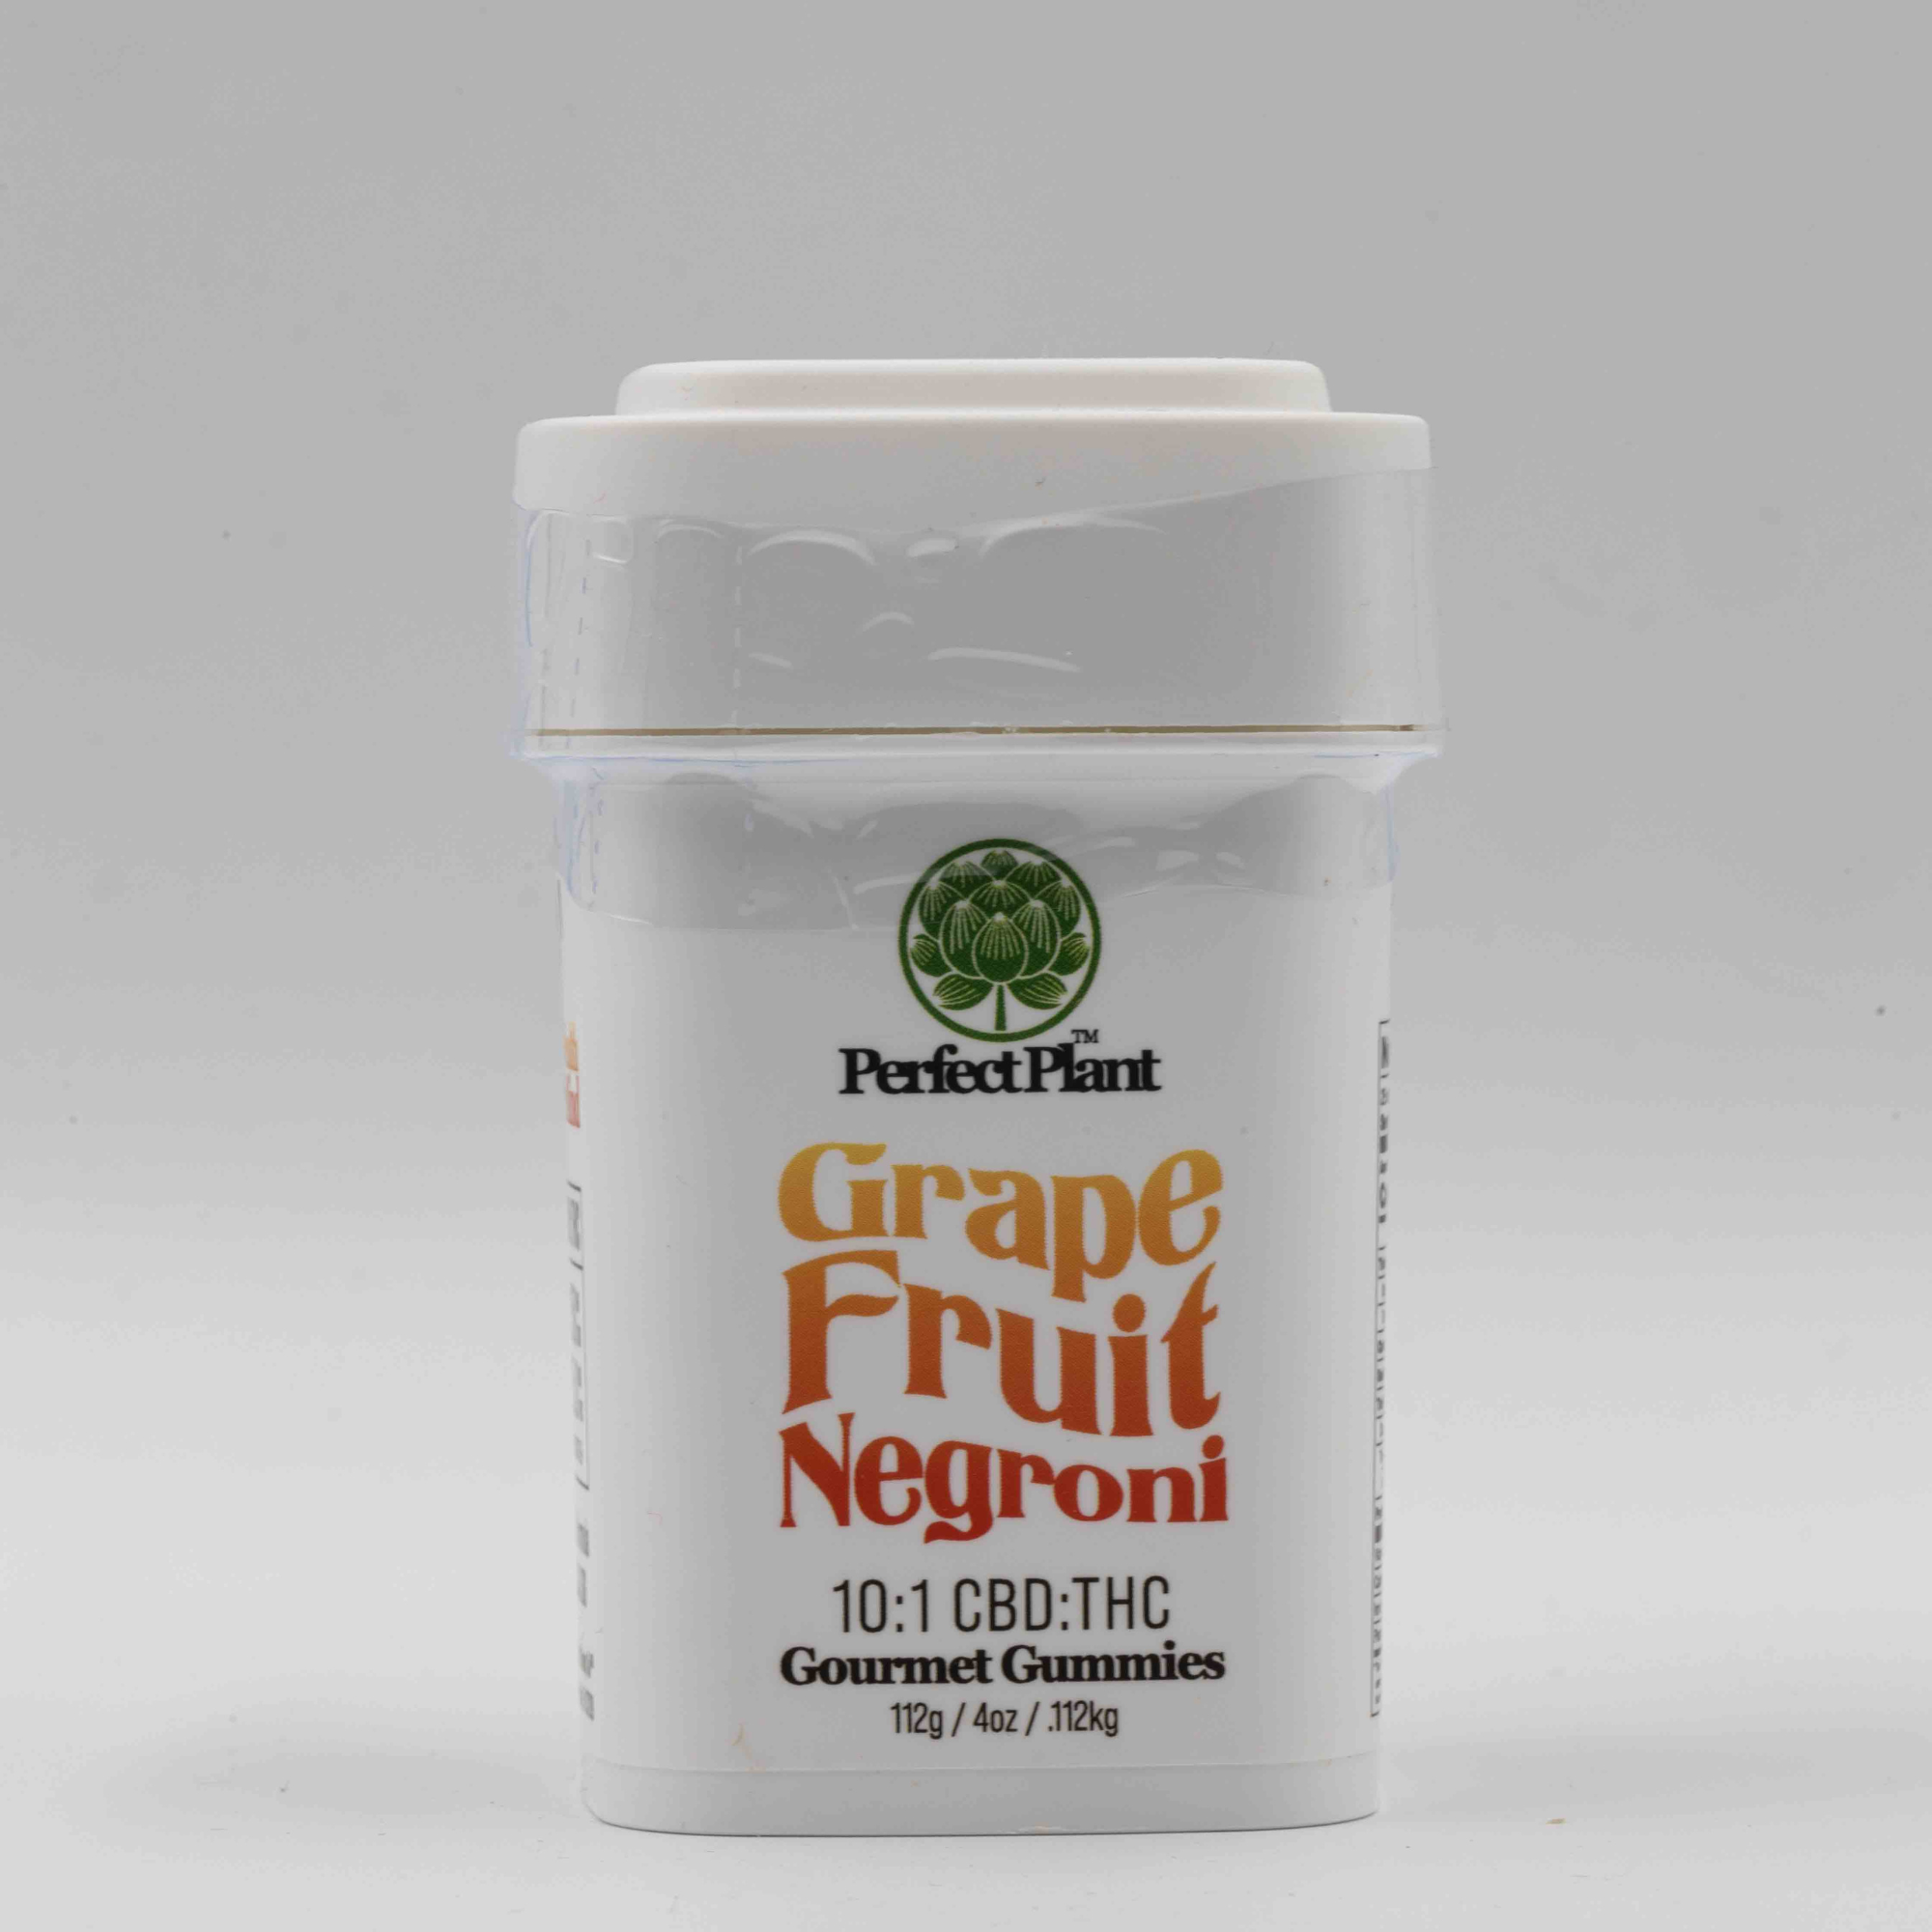 Grapefruit Negroni - Gourmet Gummies (10:1 CBD:THC)